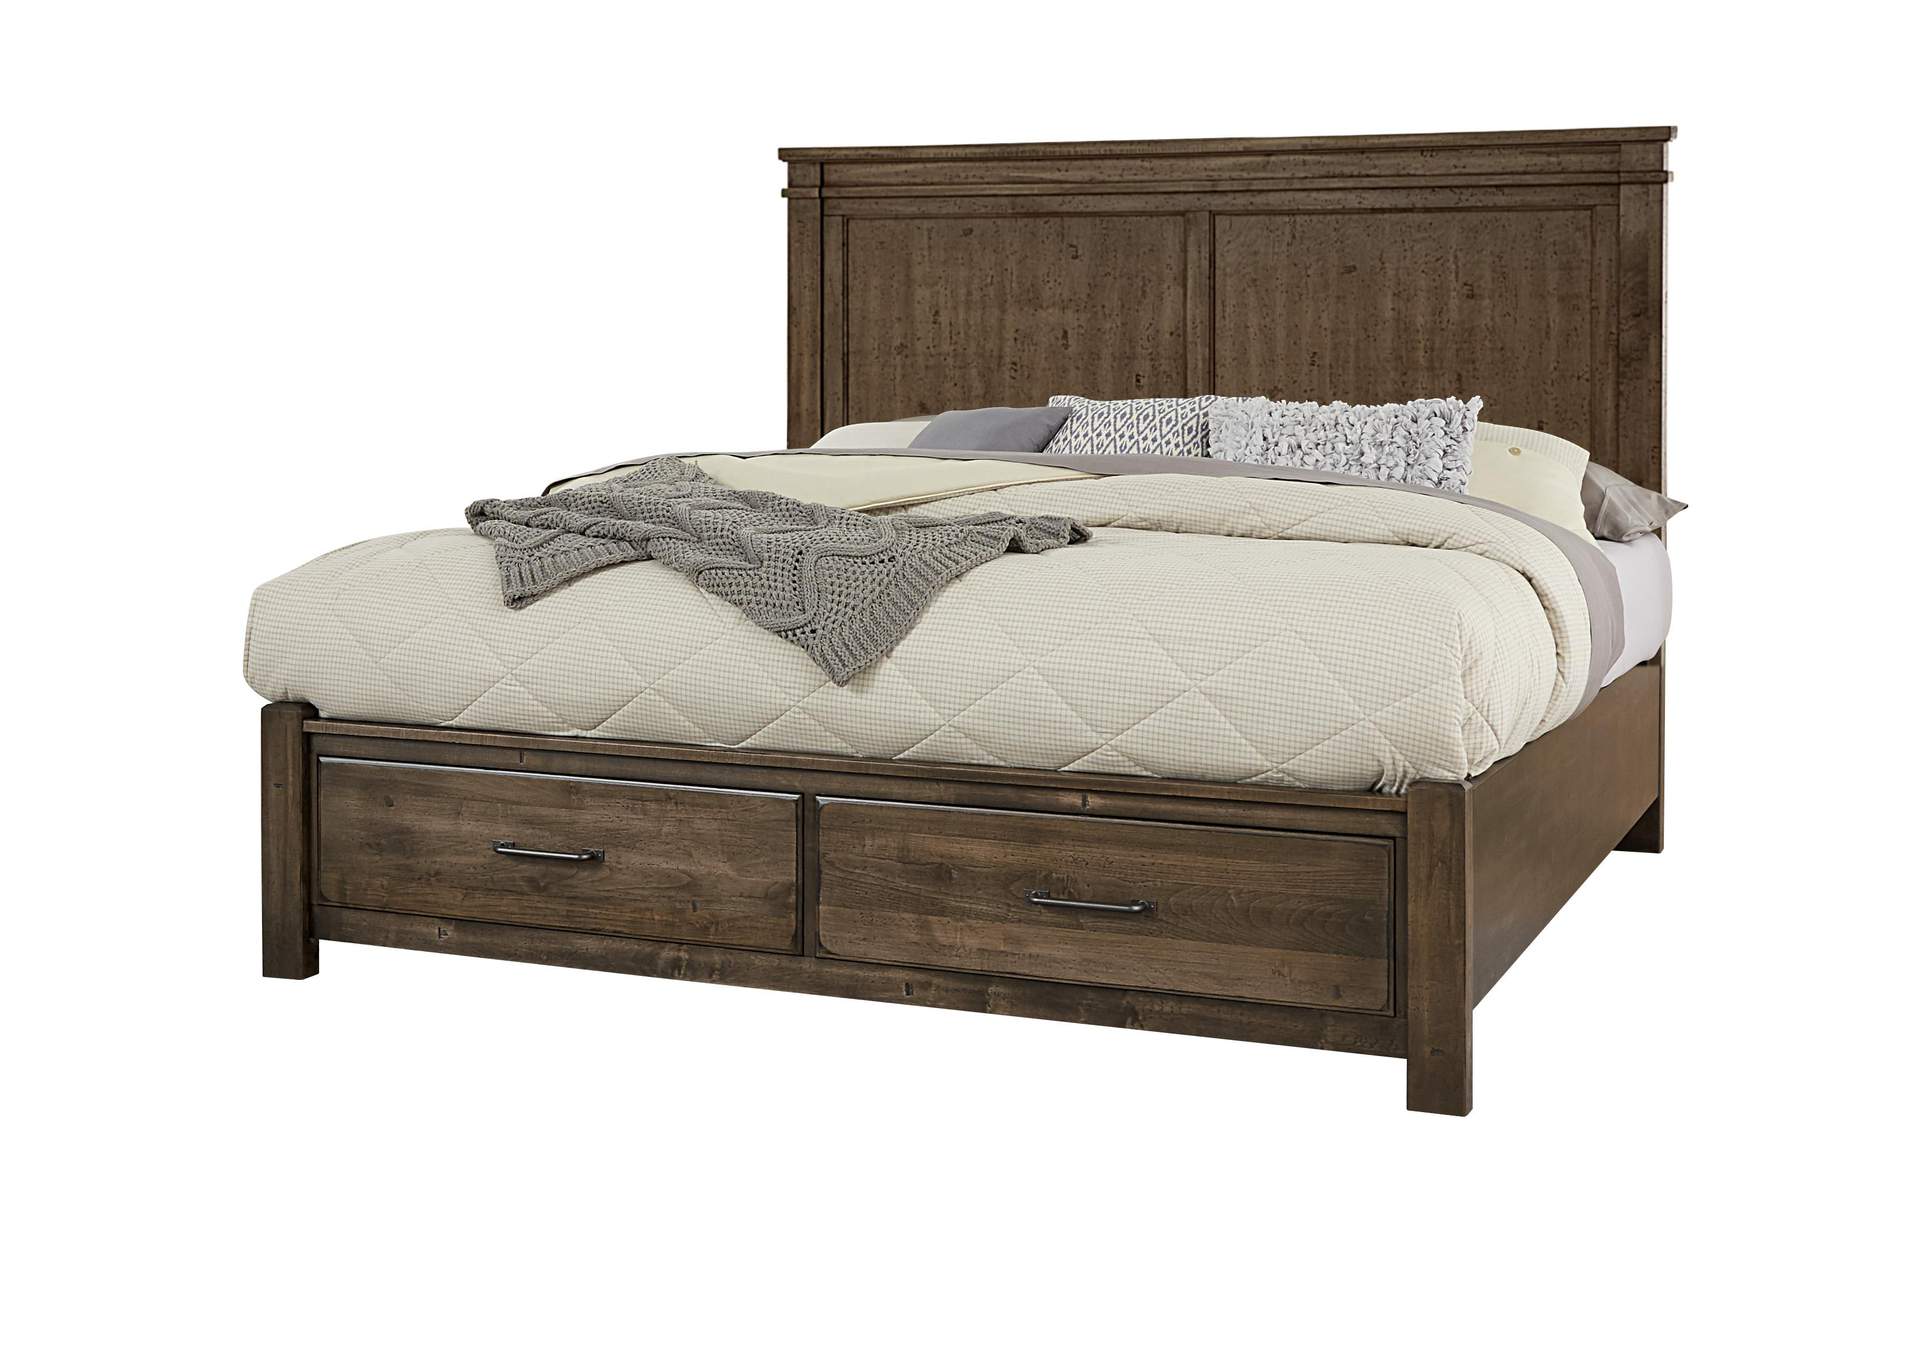 Cool Rustic Mink King Mansion Bed w/ Footboard Storage,Vaughan-Bassett